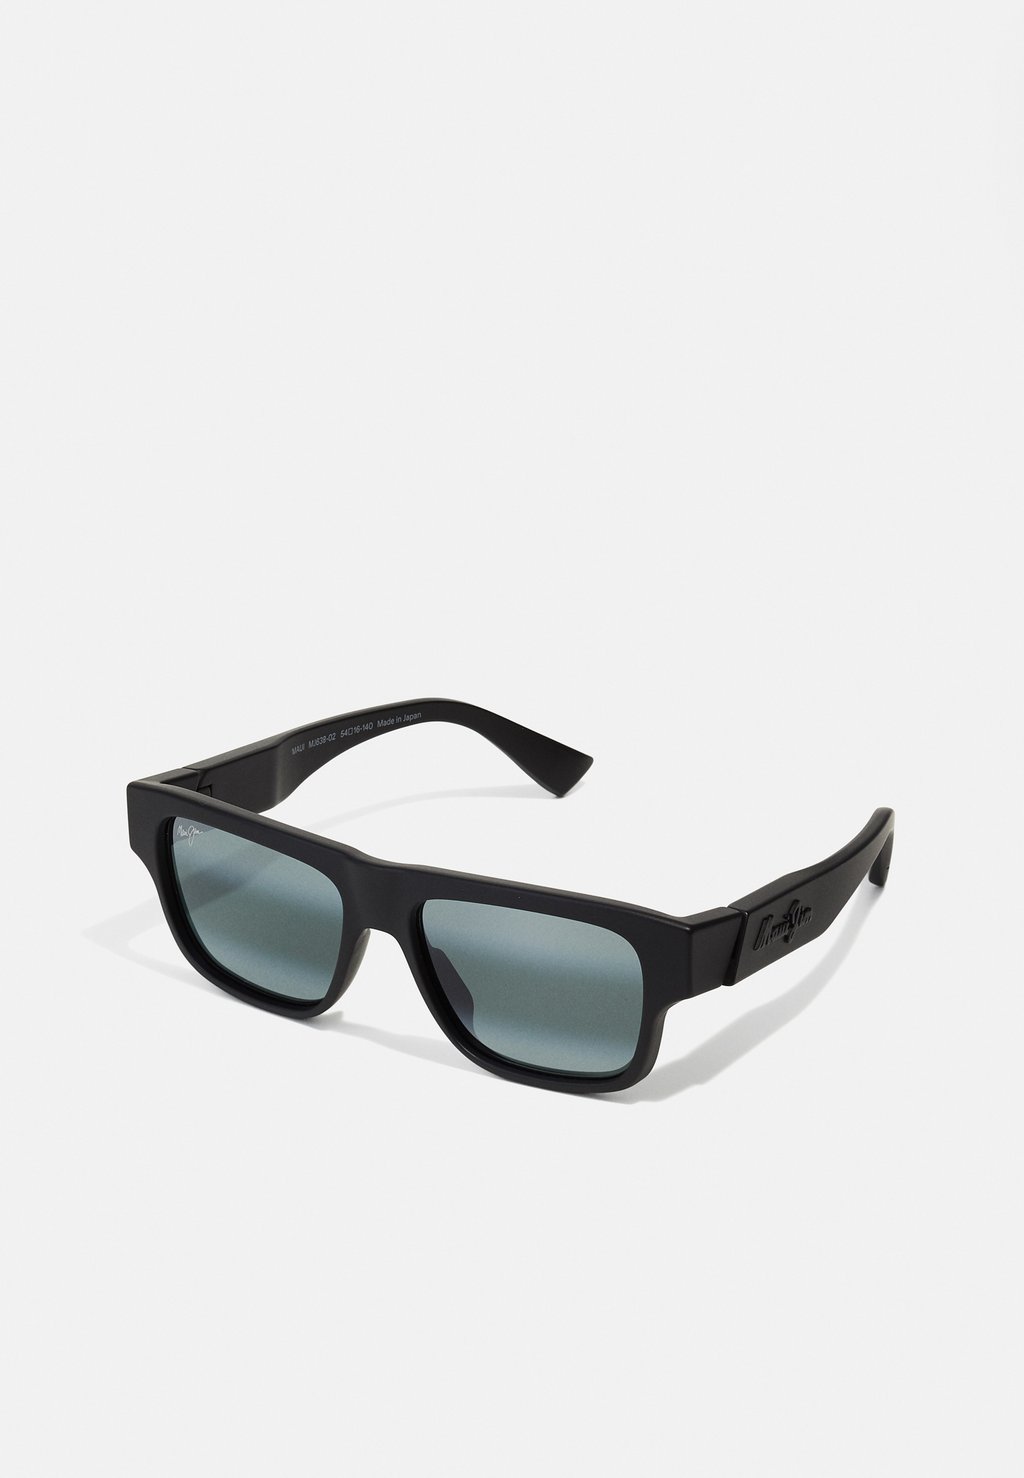 Солнцезащитные очки UNISEX Maui Jim, цвет black/grey солнцезащитные очки nuu landing maui jim цвет black gloss black rubber neutral grey polarized